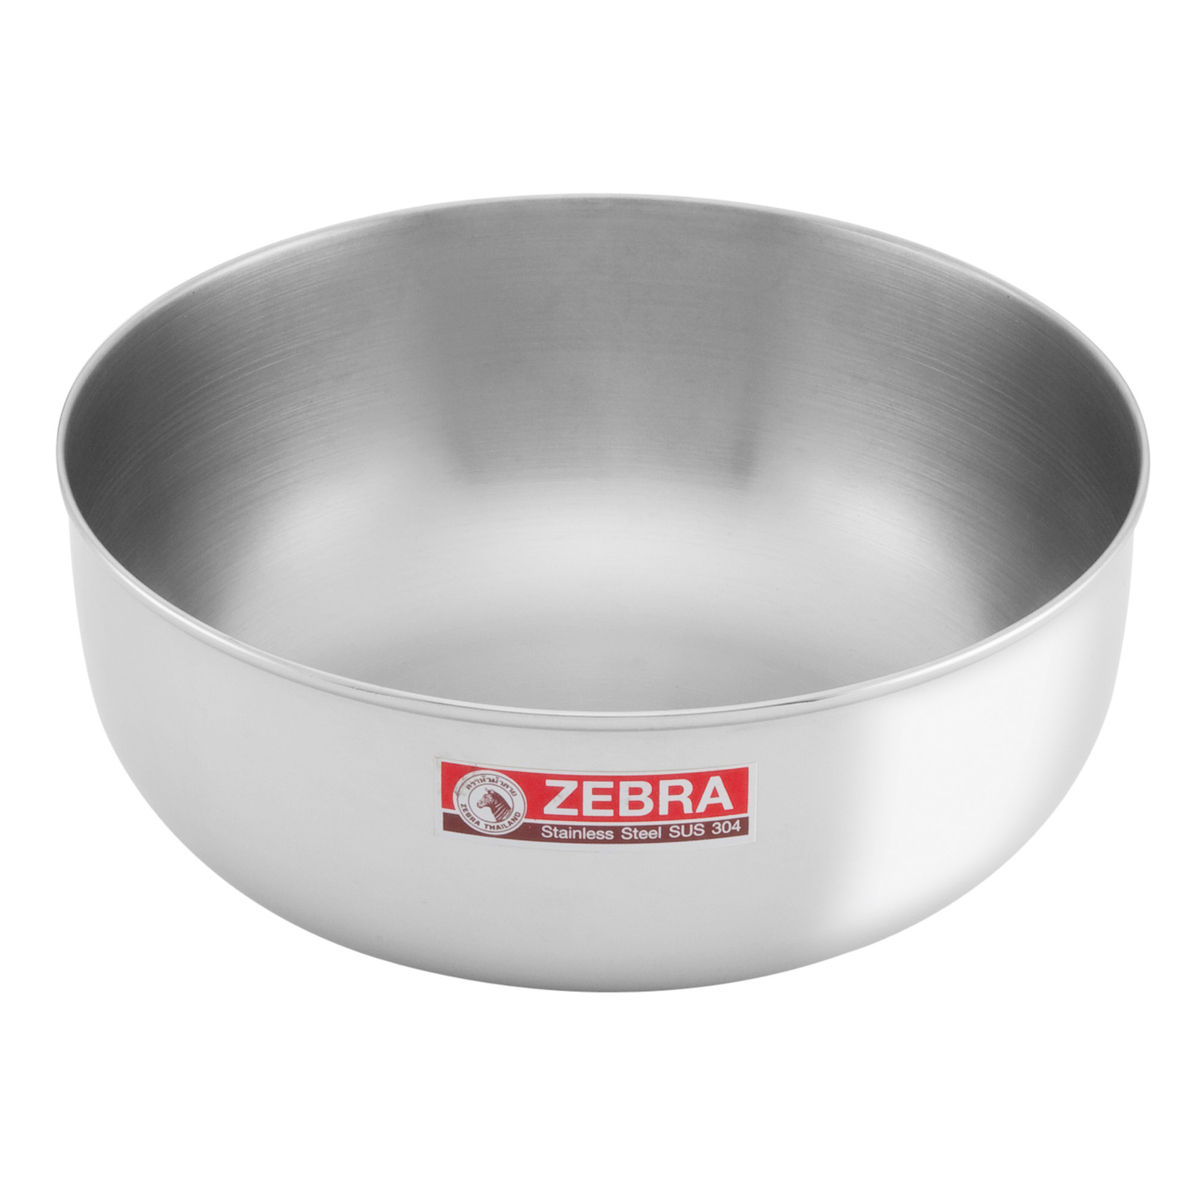 Zebra Stainless Steel Water Bowl, 16 cm, 111016